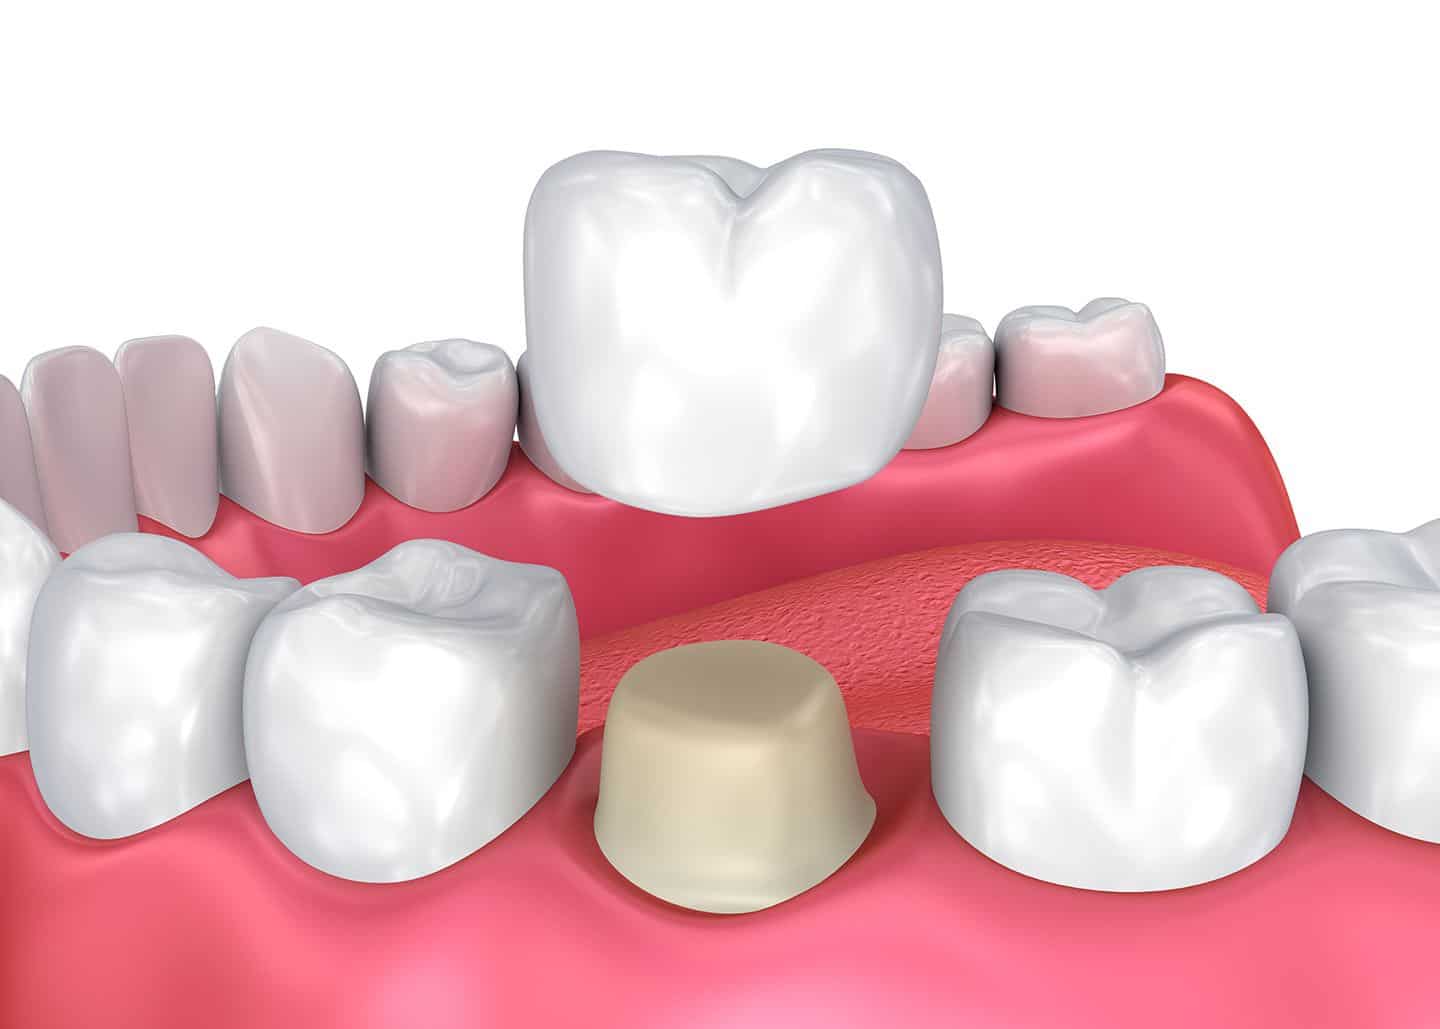 ما هو تاج الاسنان؟ ما هي اهم (4) استخدامات لتاج الاسنان؟